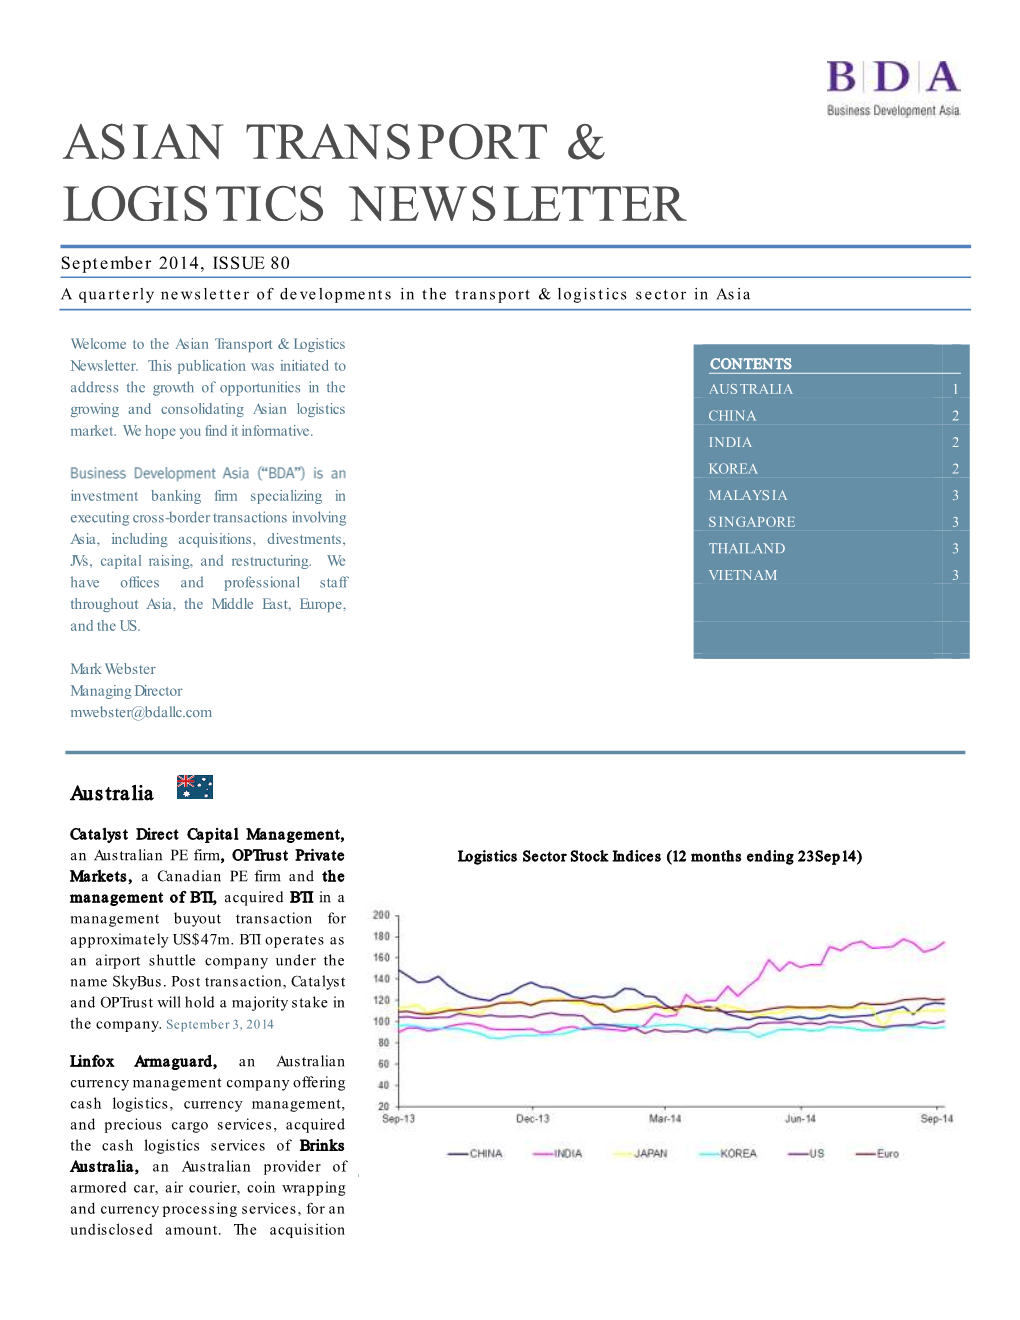 Asian Transport & Logistics Newsletter